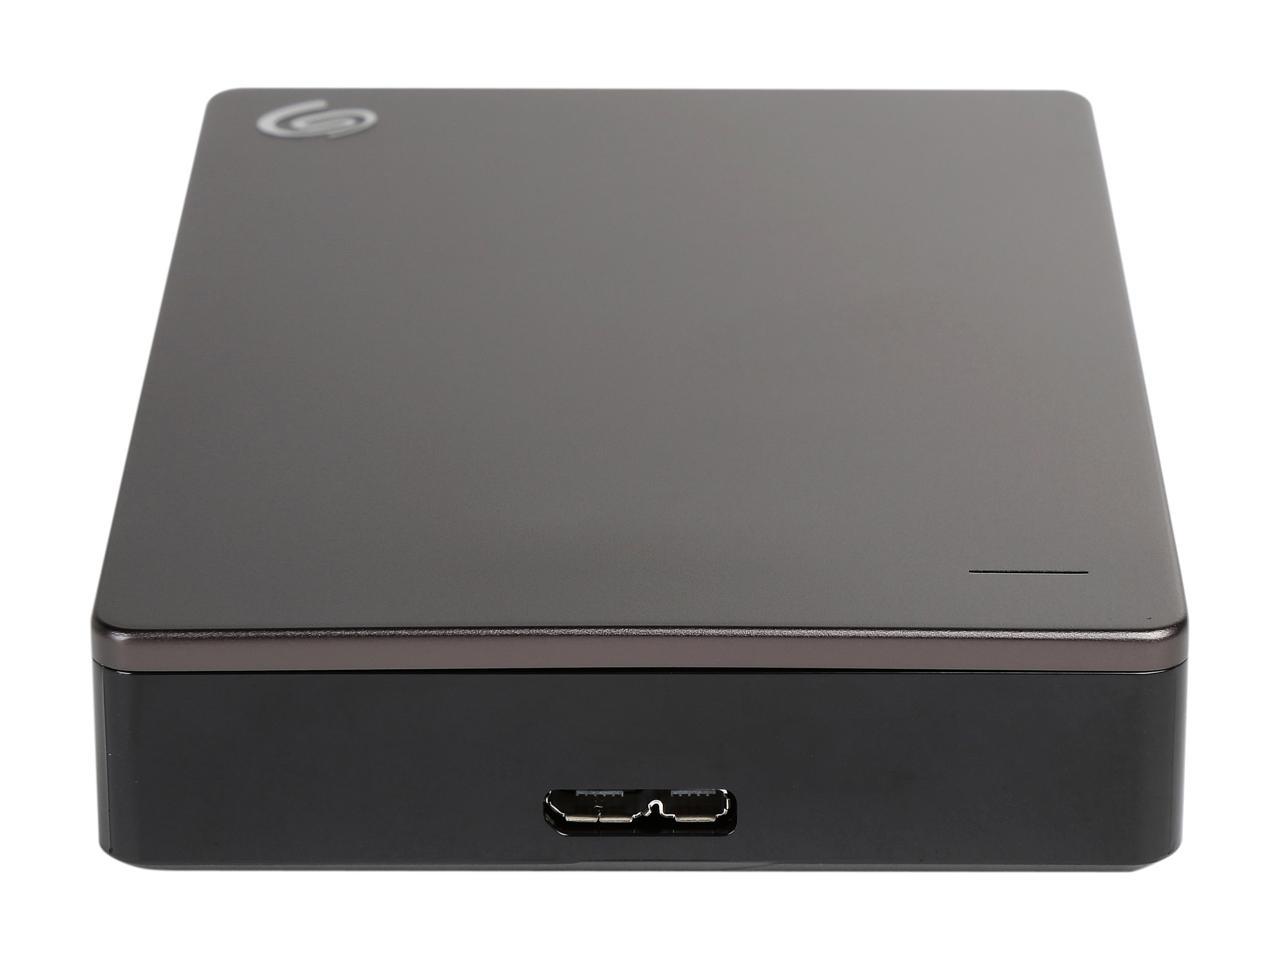 Seagate Backup Plus 5TB USB 3.0 Portable External Hard Drive - STDR5000100 (Black)